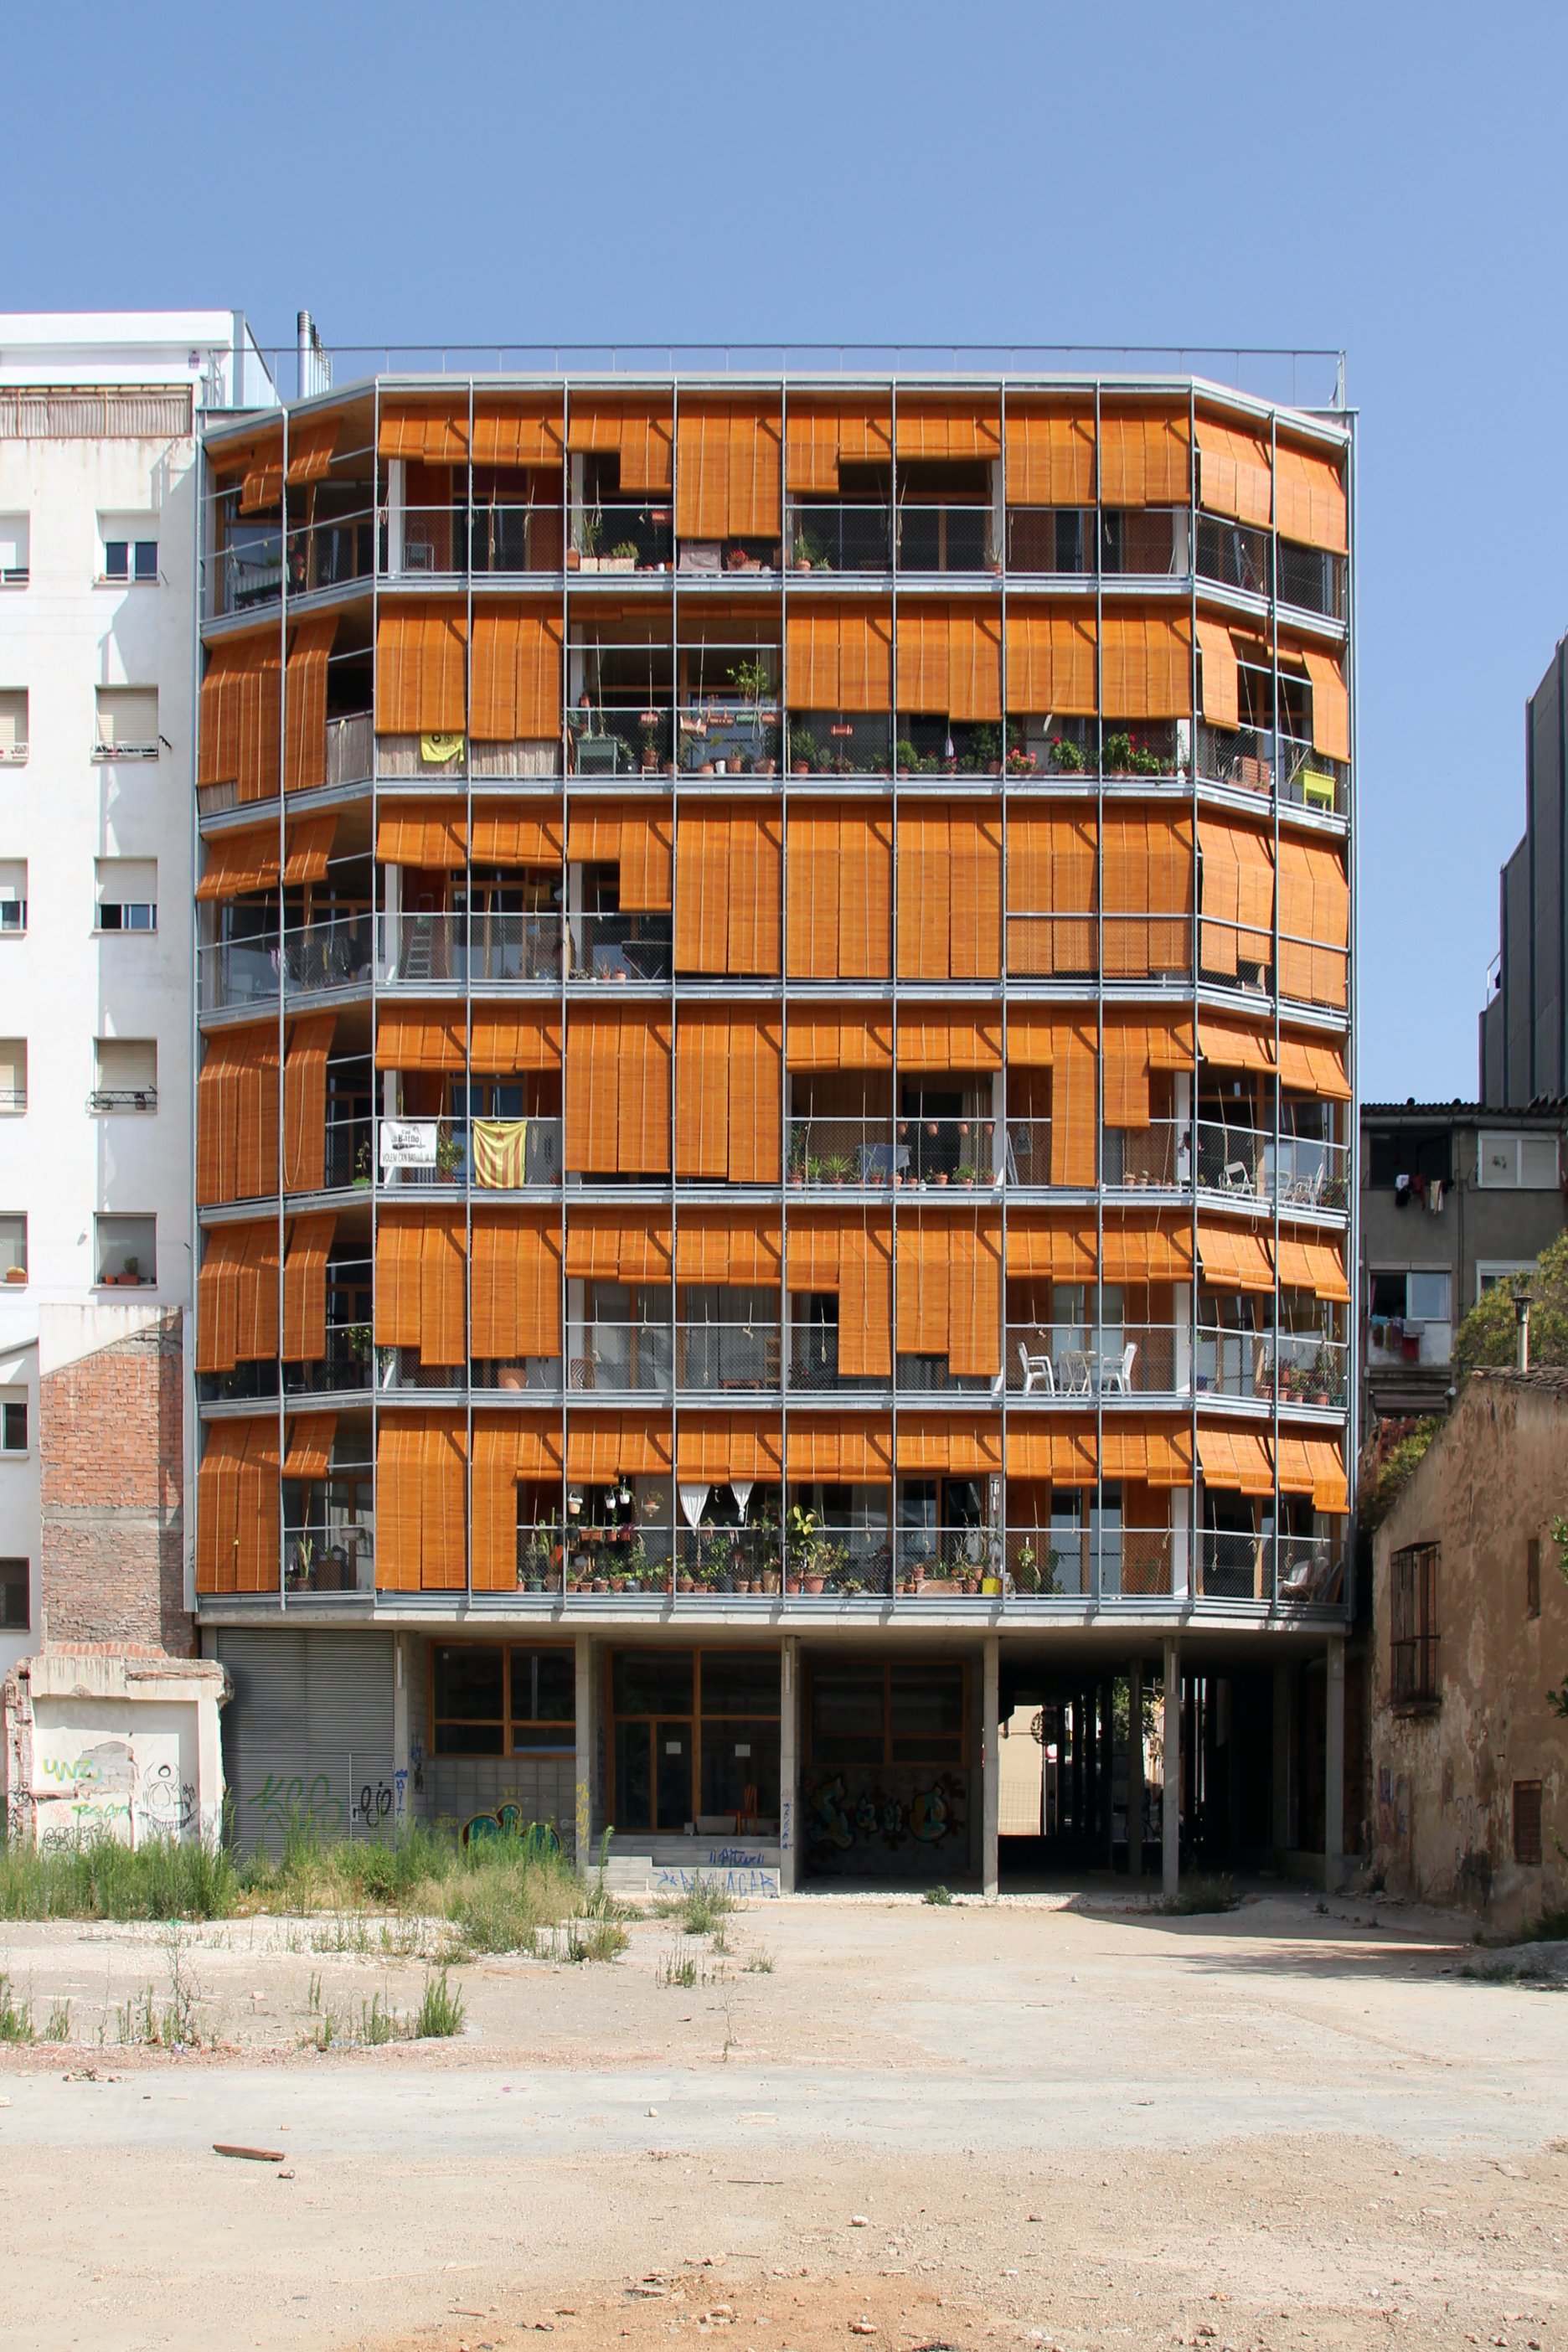 La Borda - Cooperative Housing